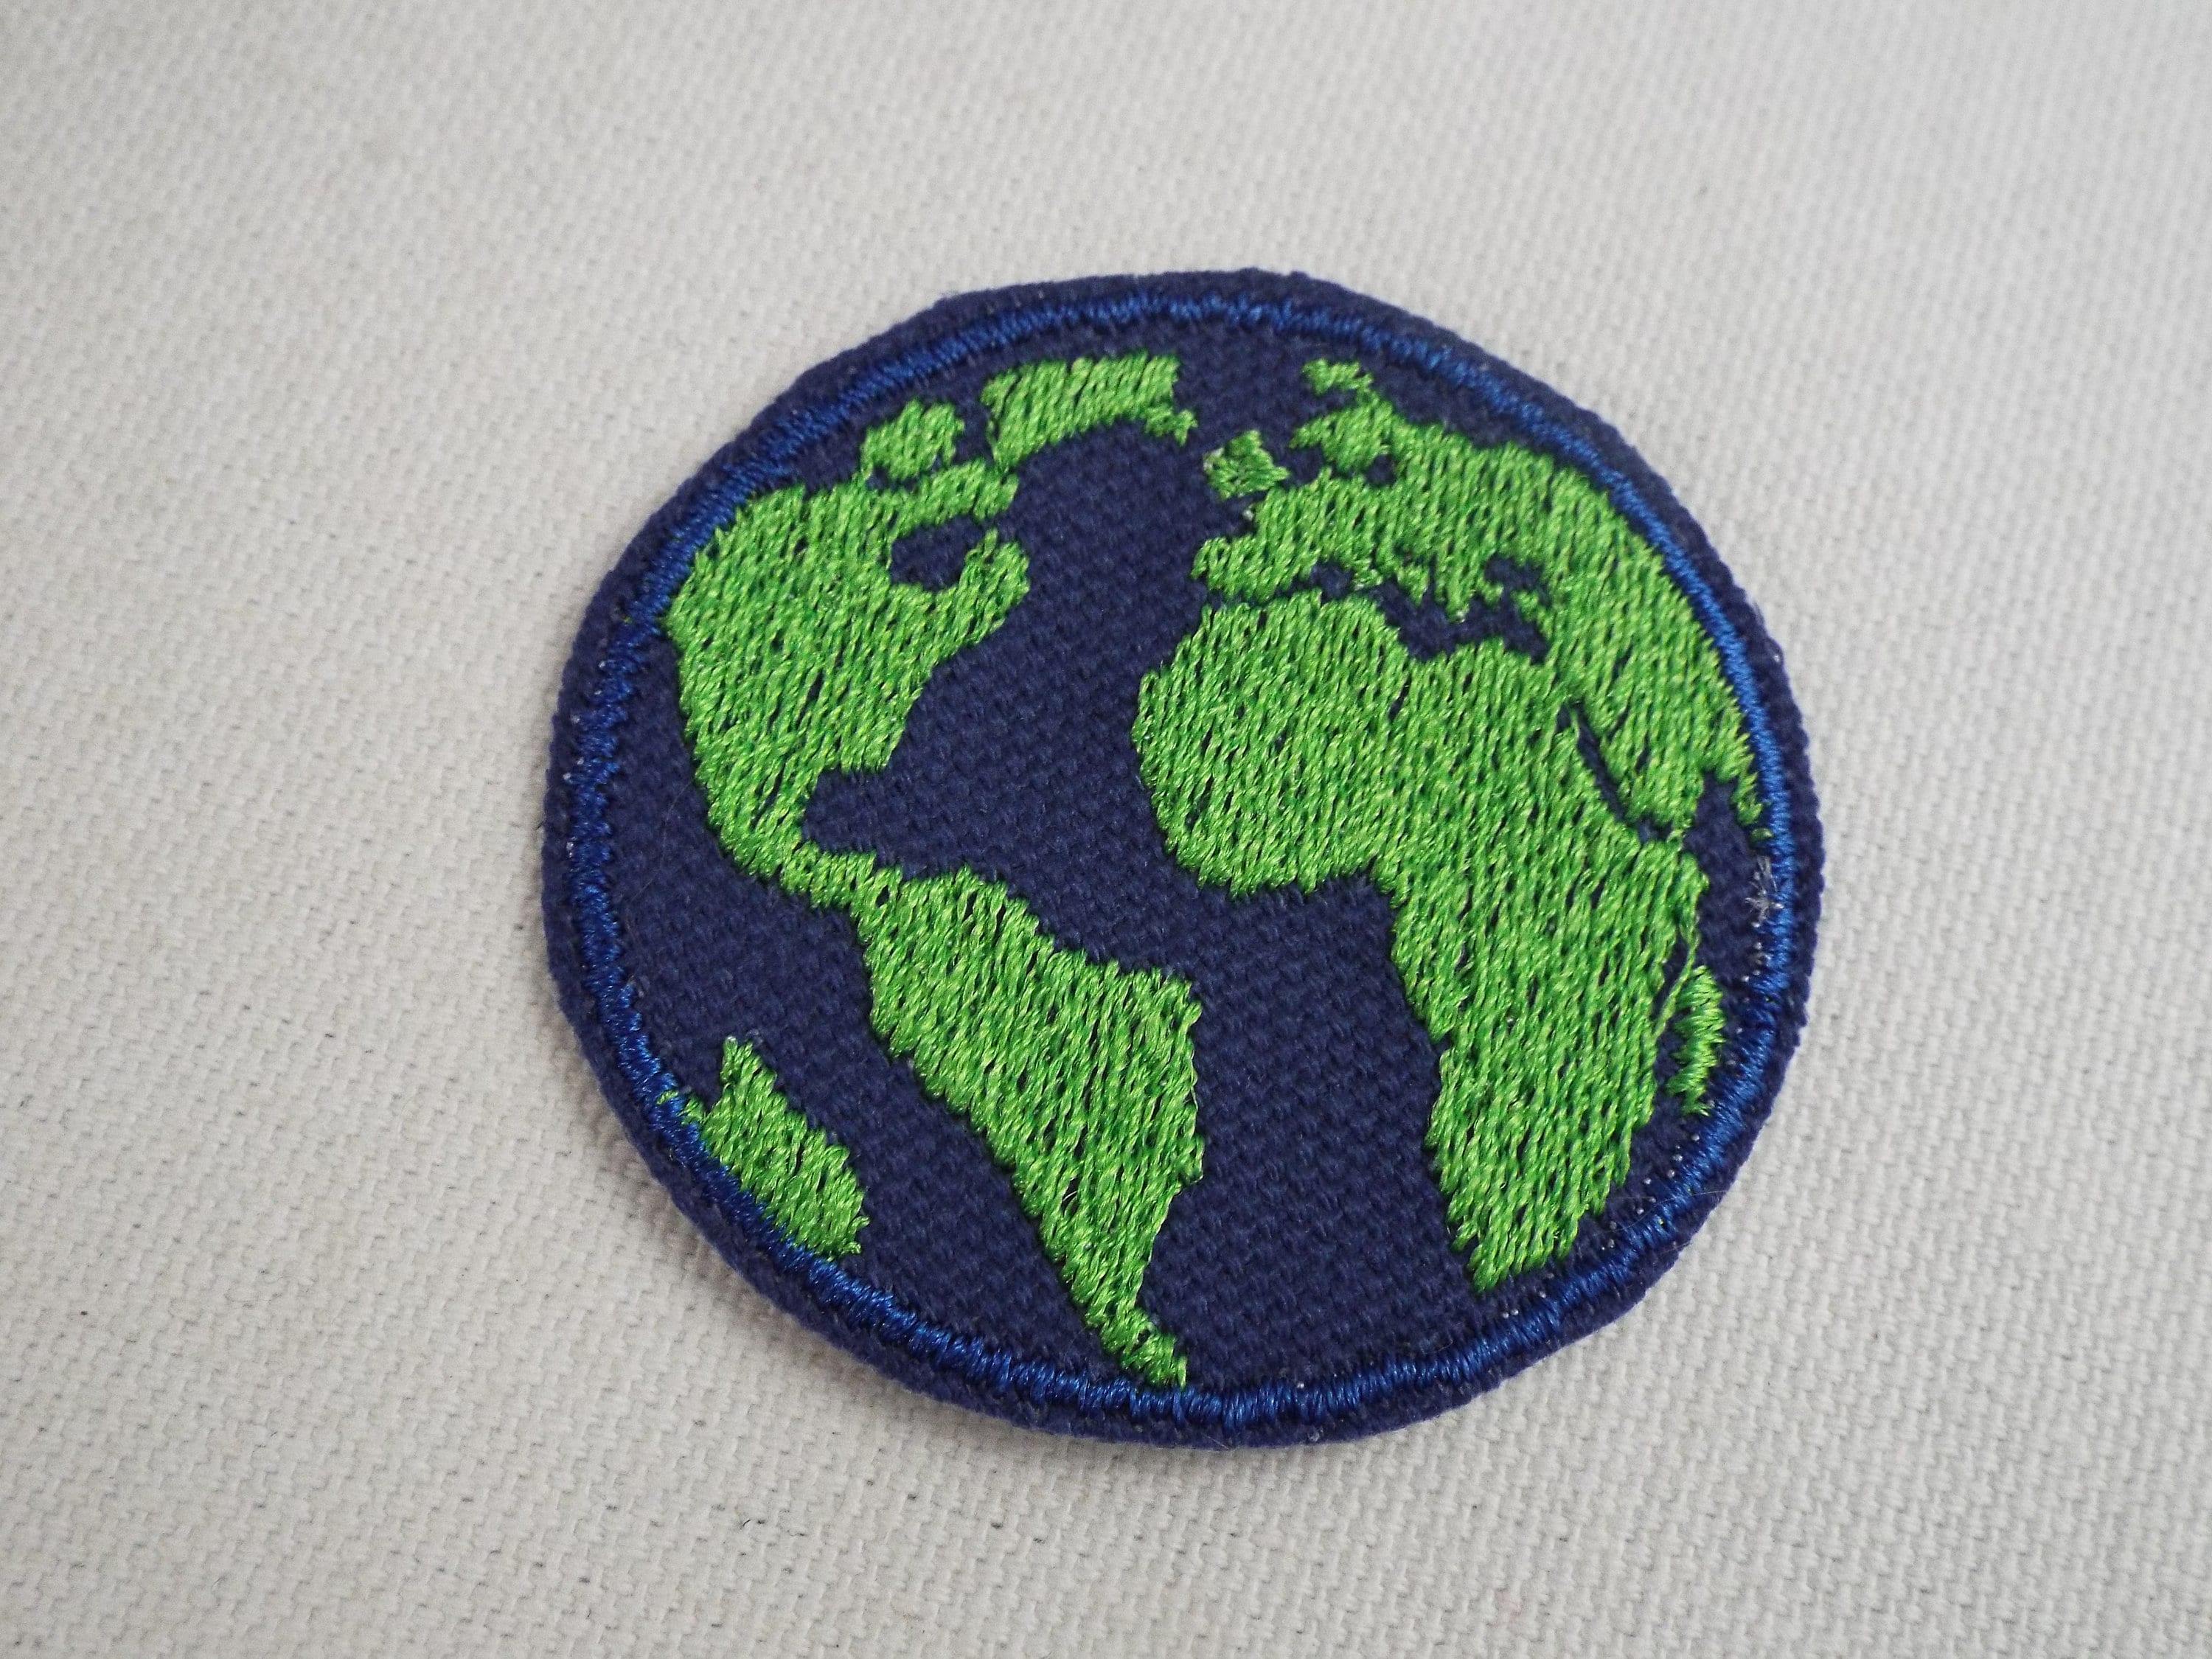 Earth Globe Iron on Screen Print Transfers for fabrics World Map